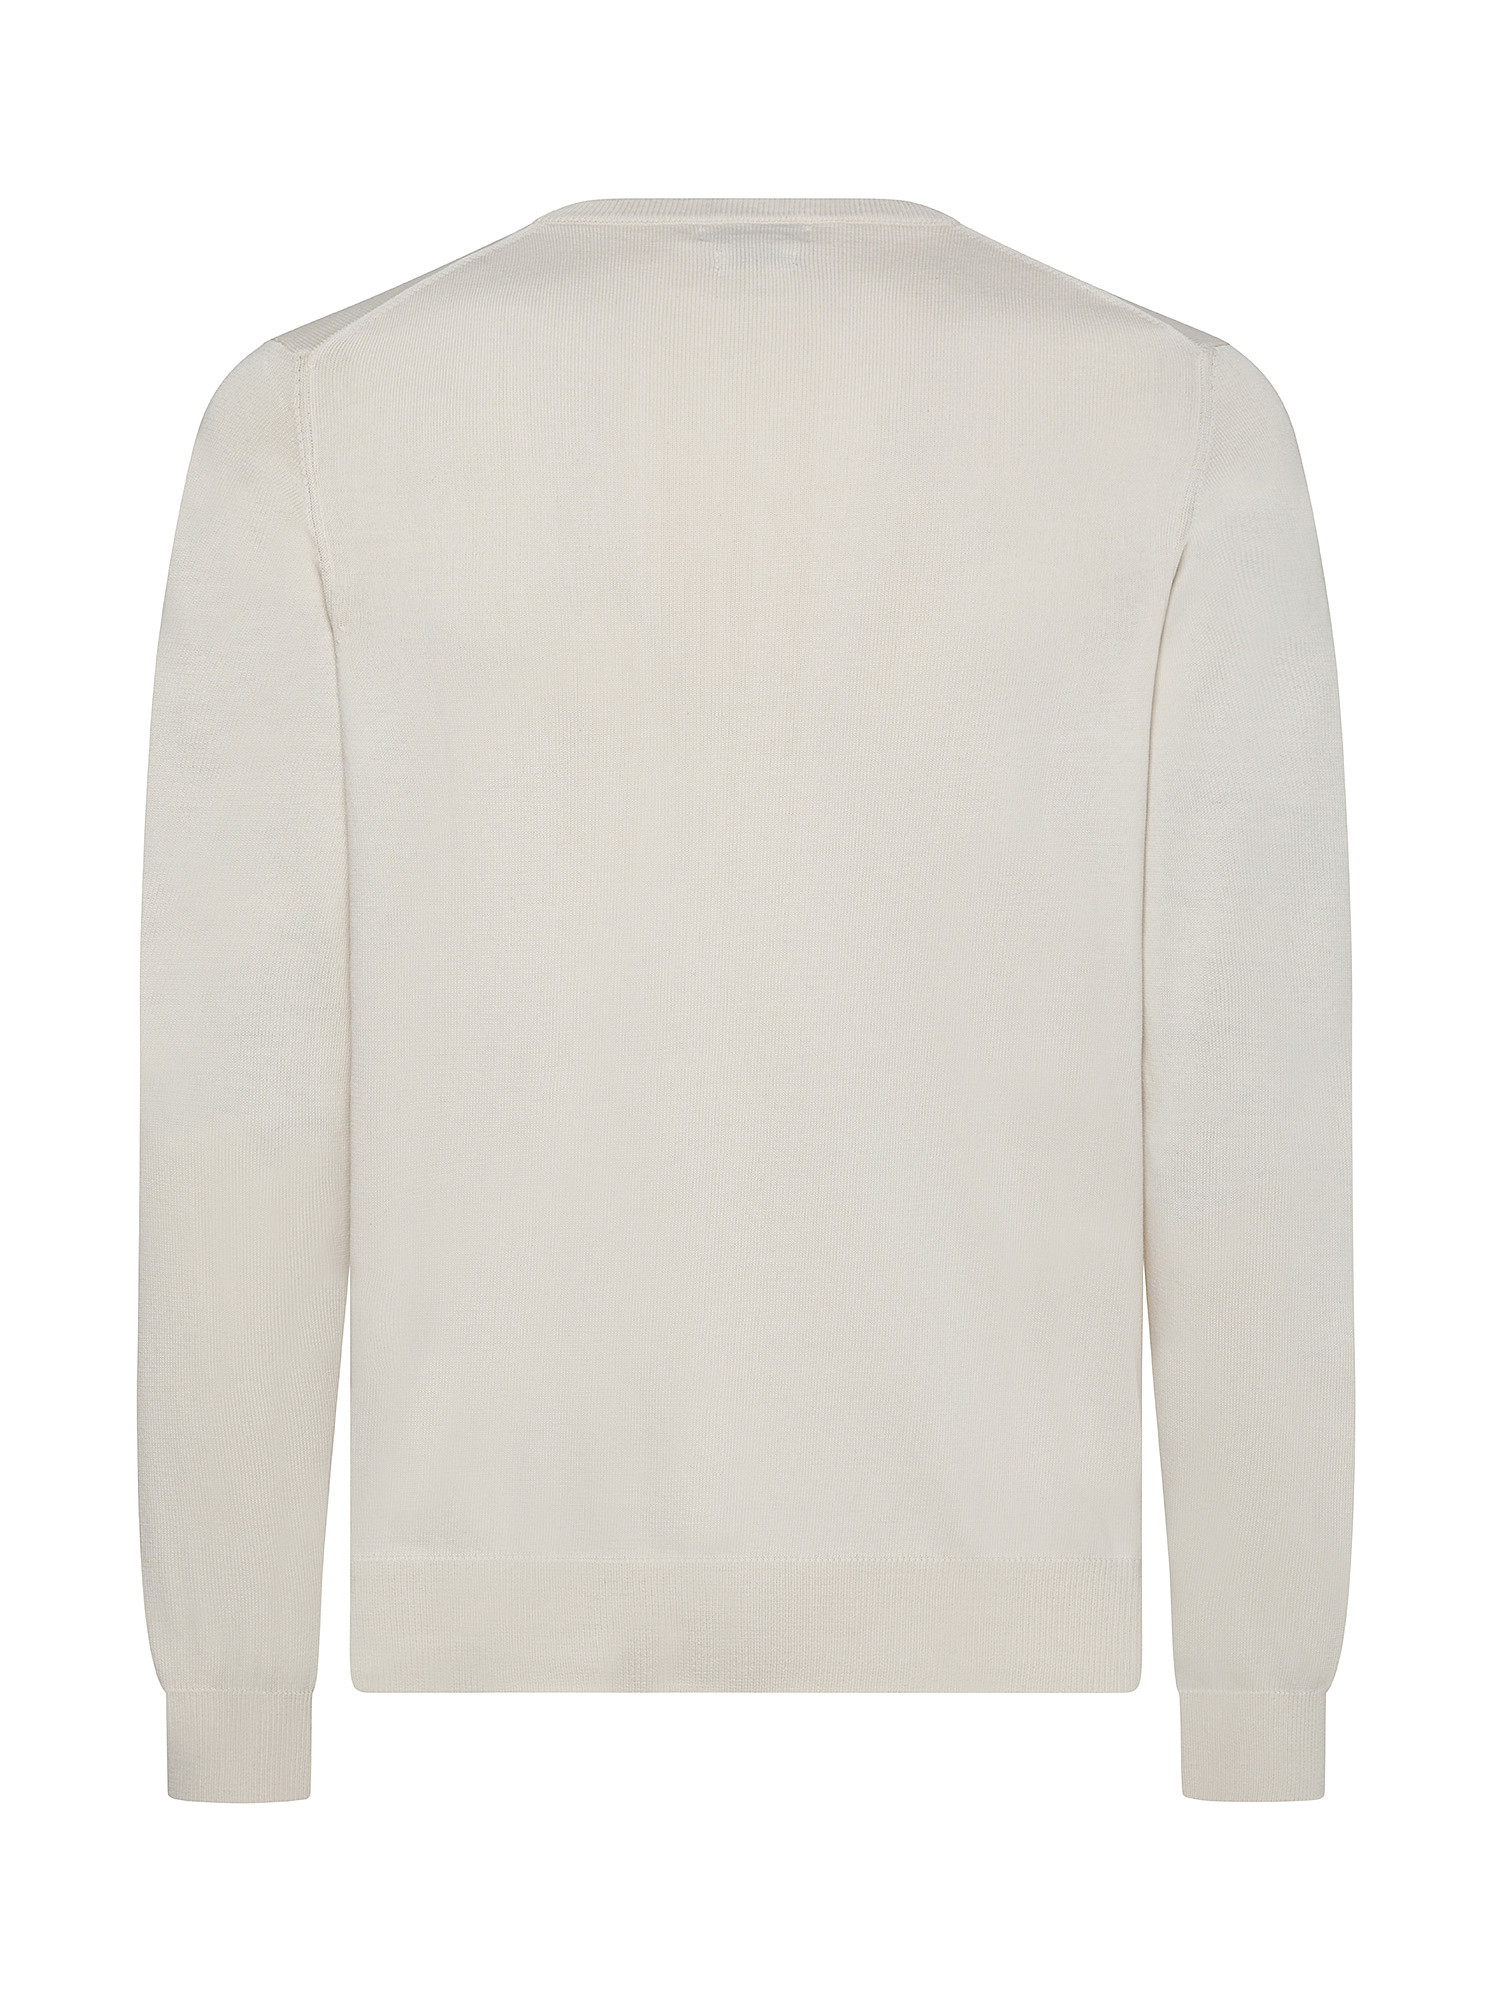 Luca D'Altieri - Crew neck sweater in extrafine pure cotton, White Cream, large image number 1